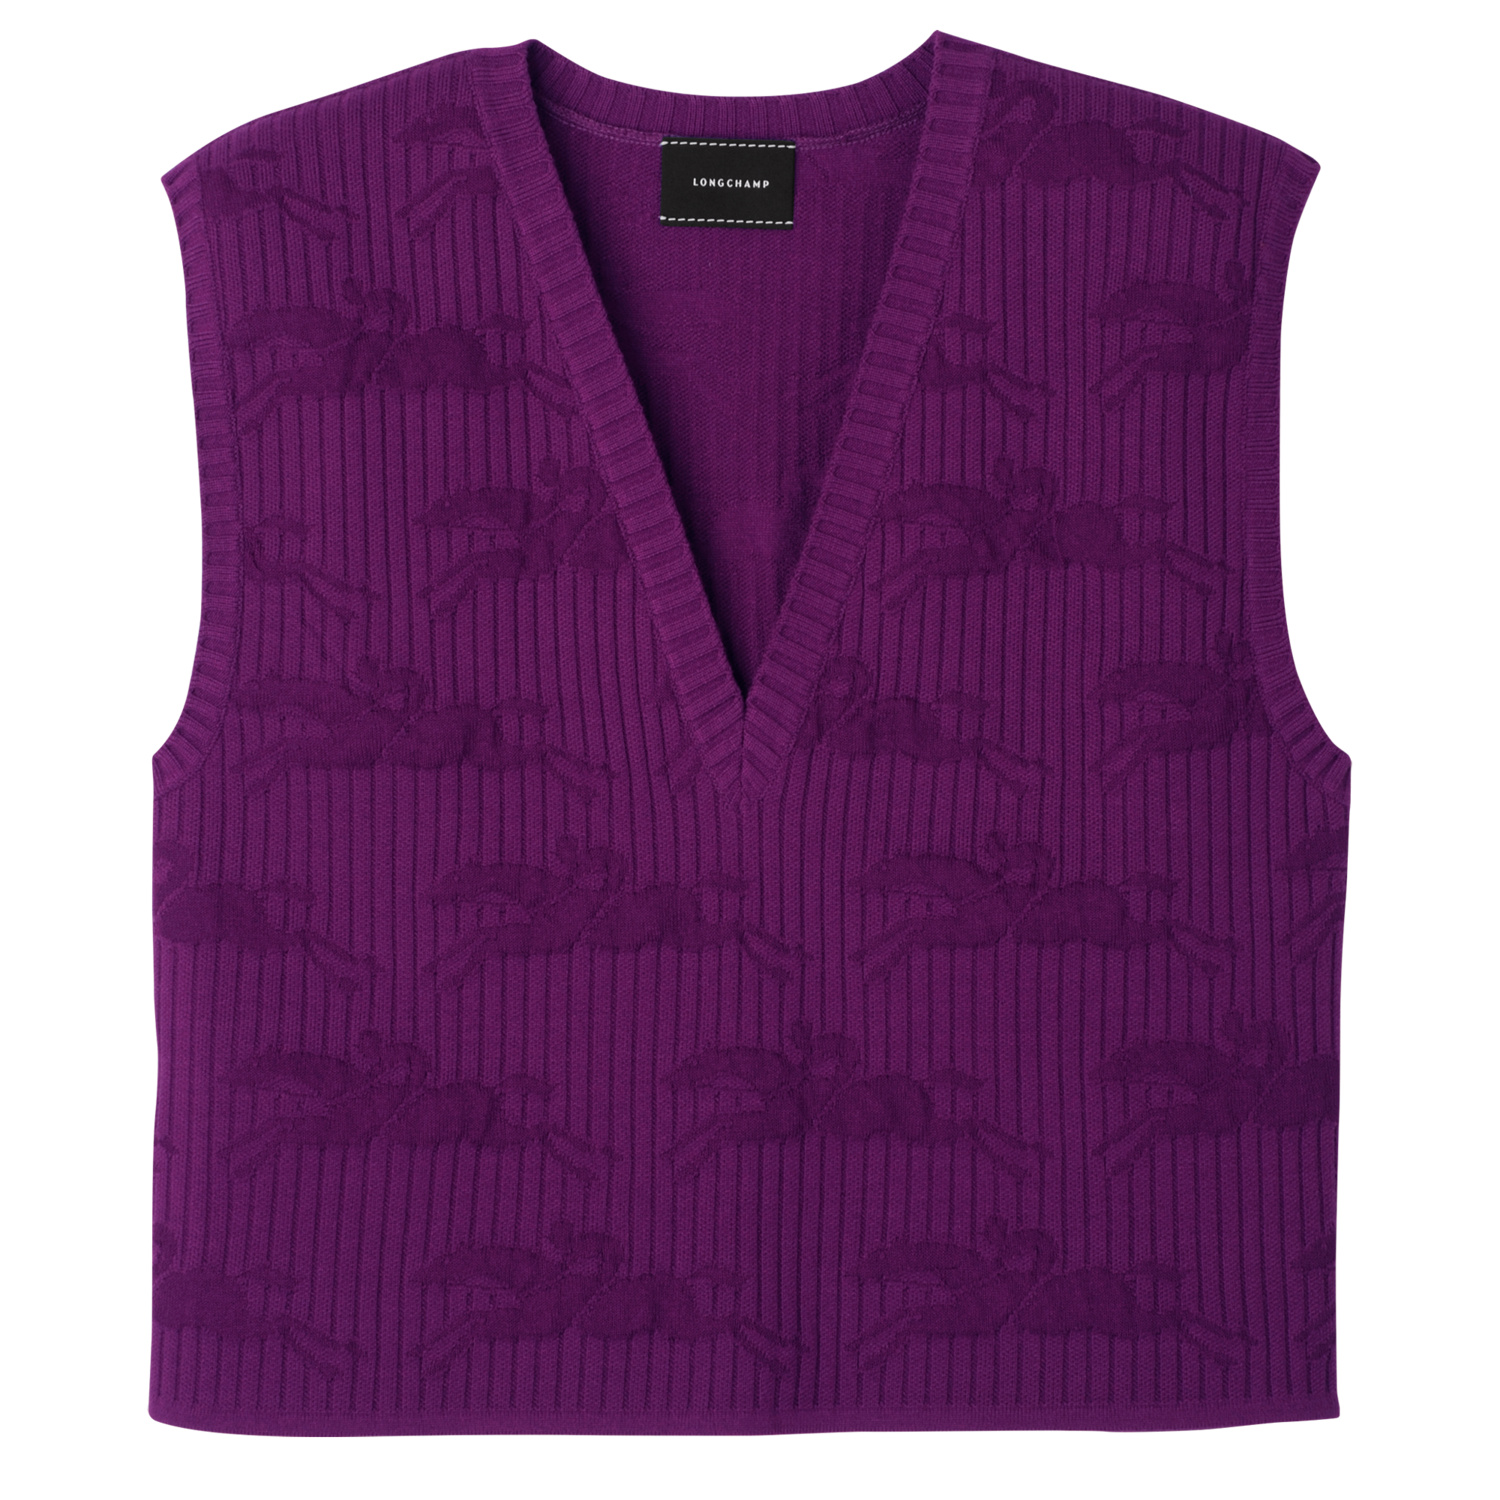 Longchamp Sleeveless Sweater In Violet